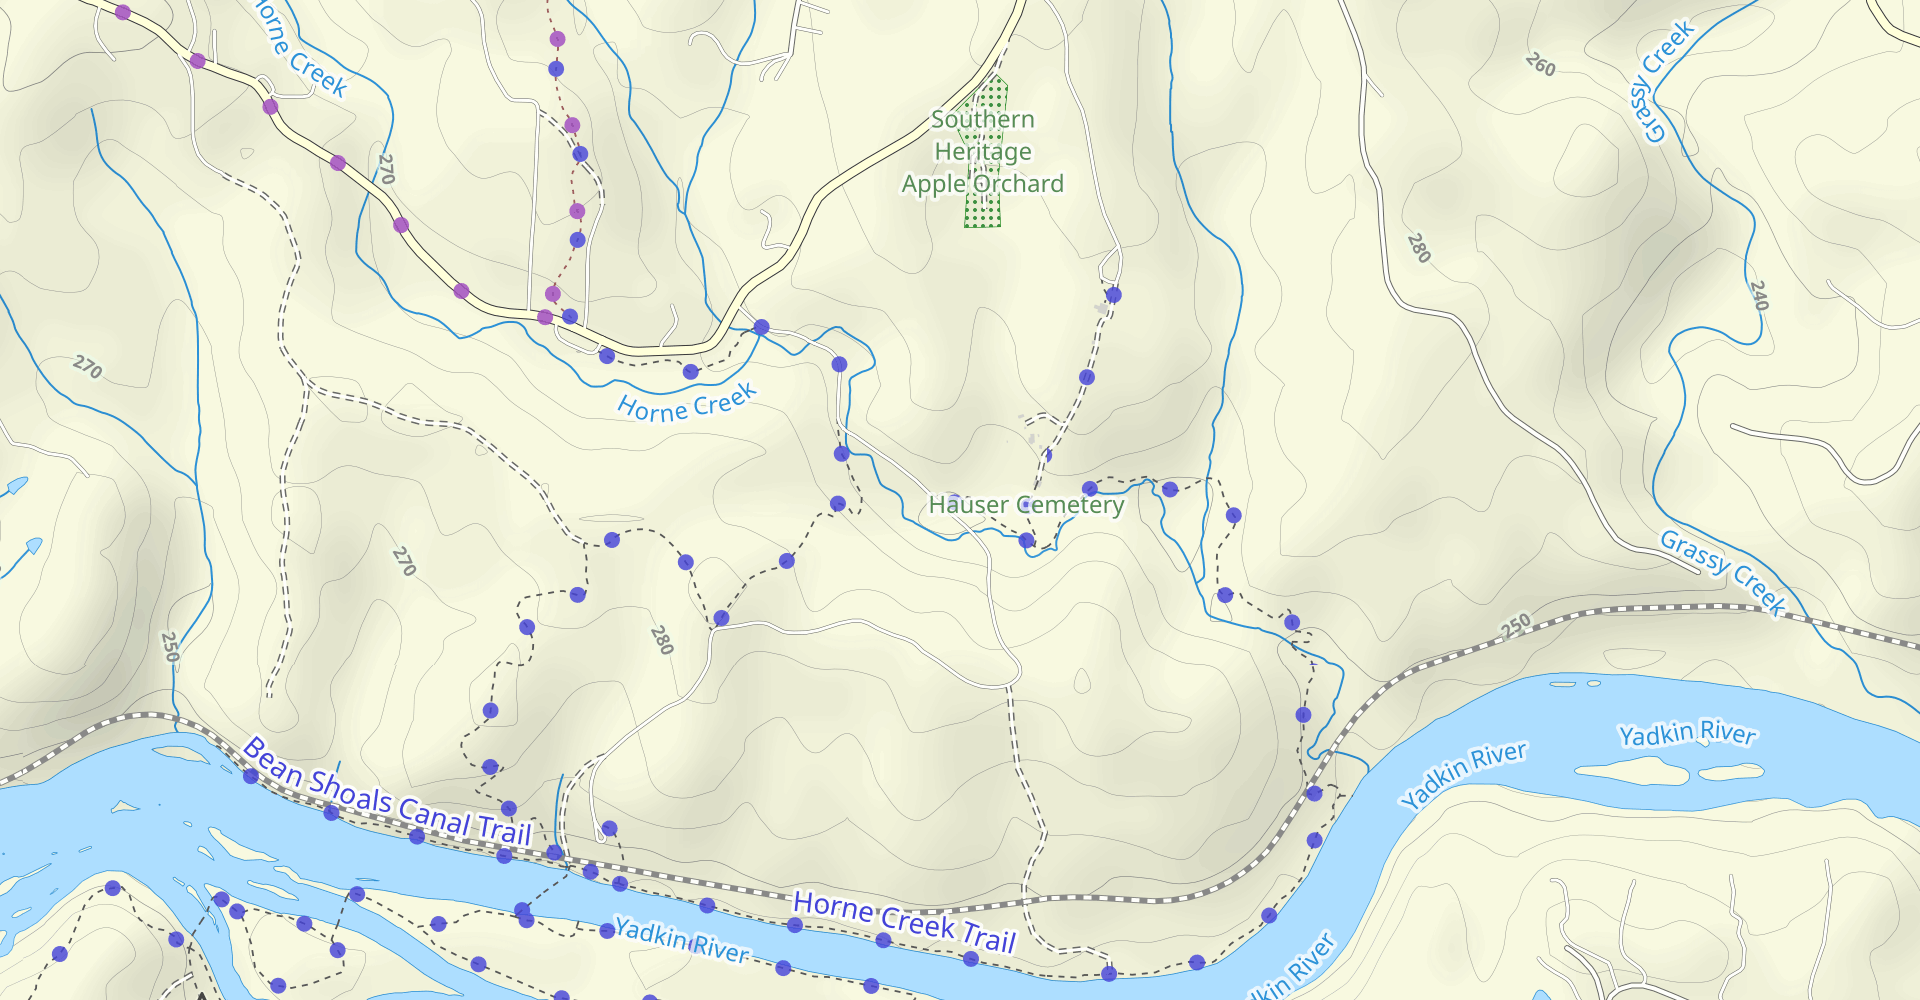 Horne Creek Trail